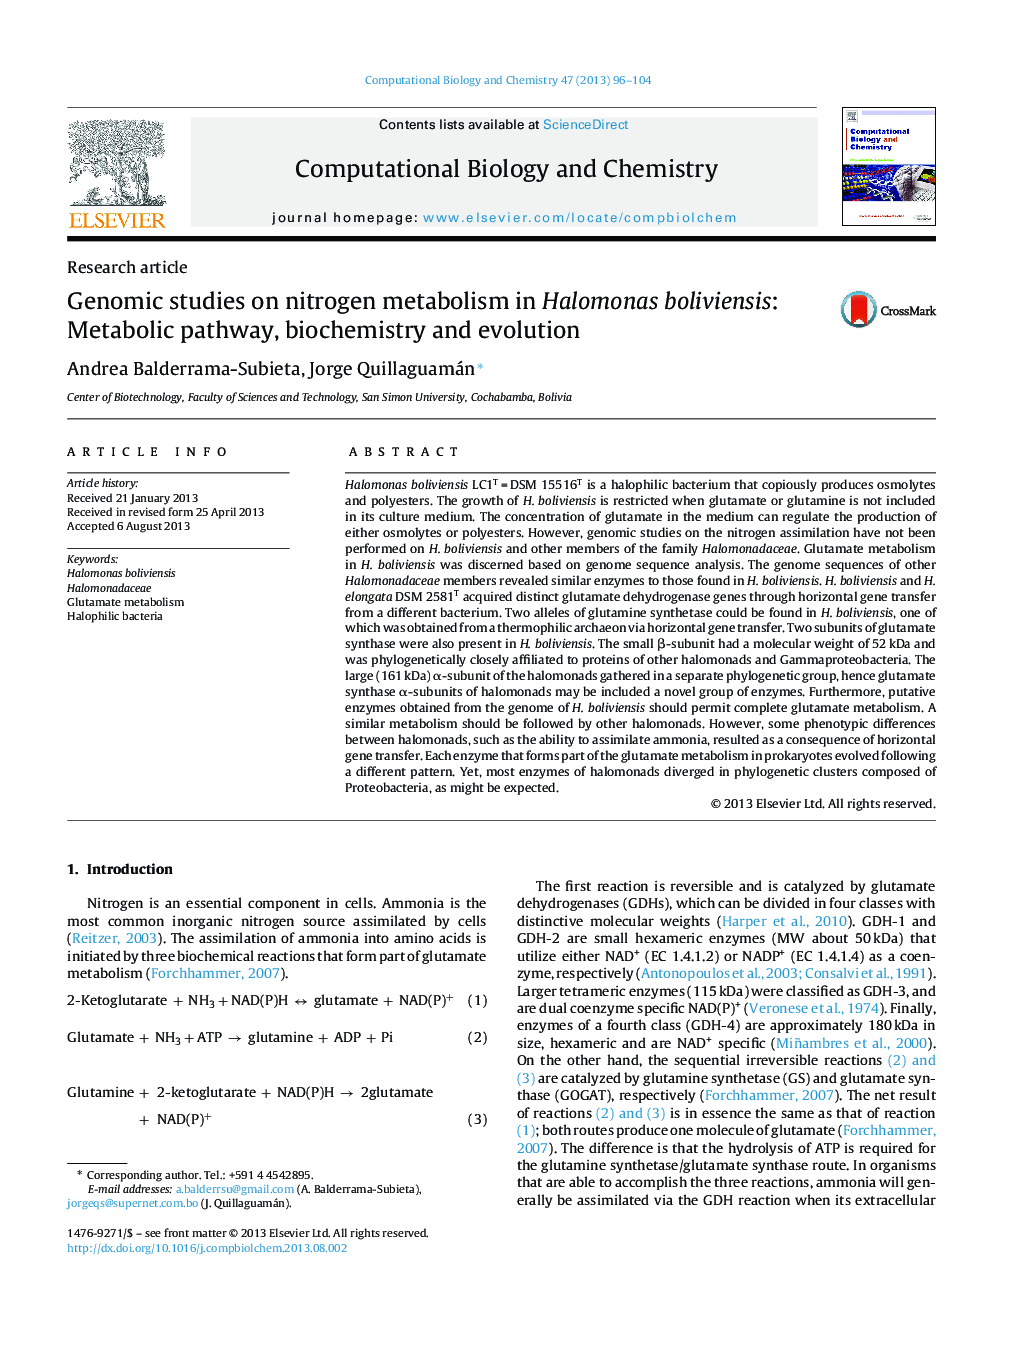 Genomic studies on nitrogen metabolism in Halomonas boliviensis: Metabolic pathway, biochemistry and evolution